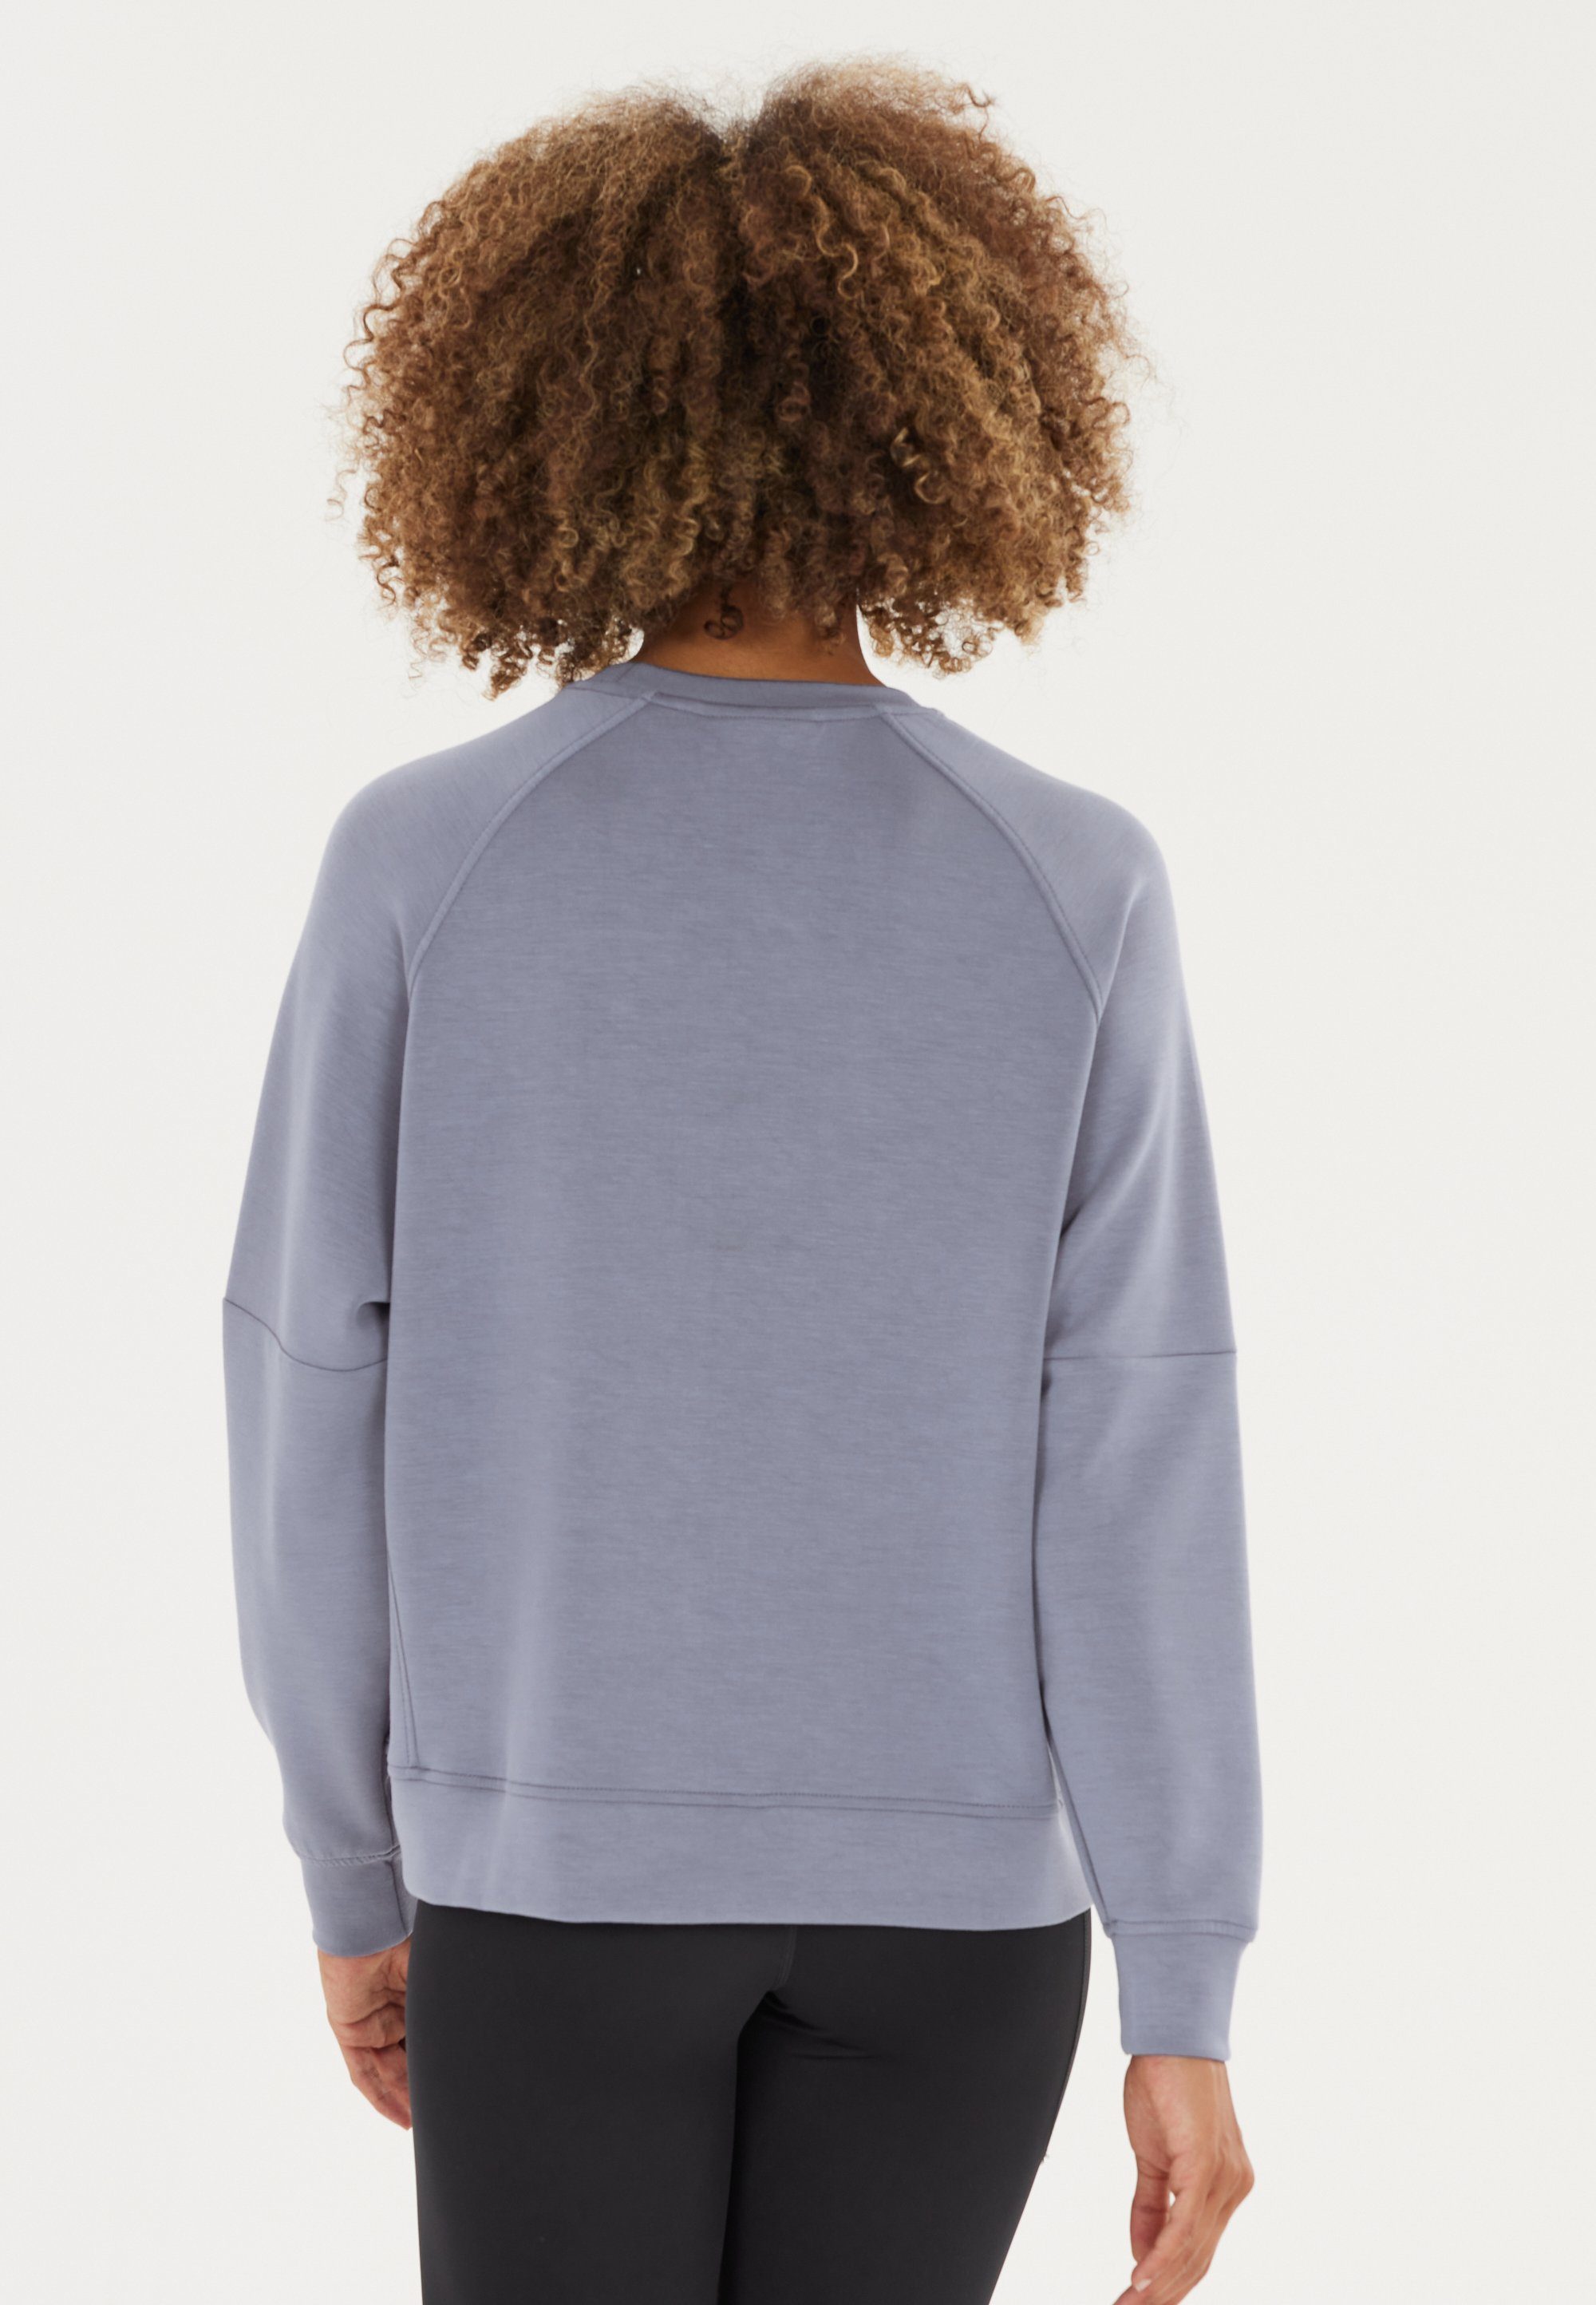 ATHLECIA Sweatshirt Jacey Material weichem blau aus extra